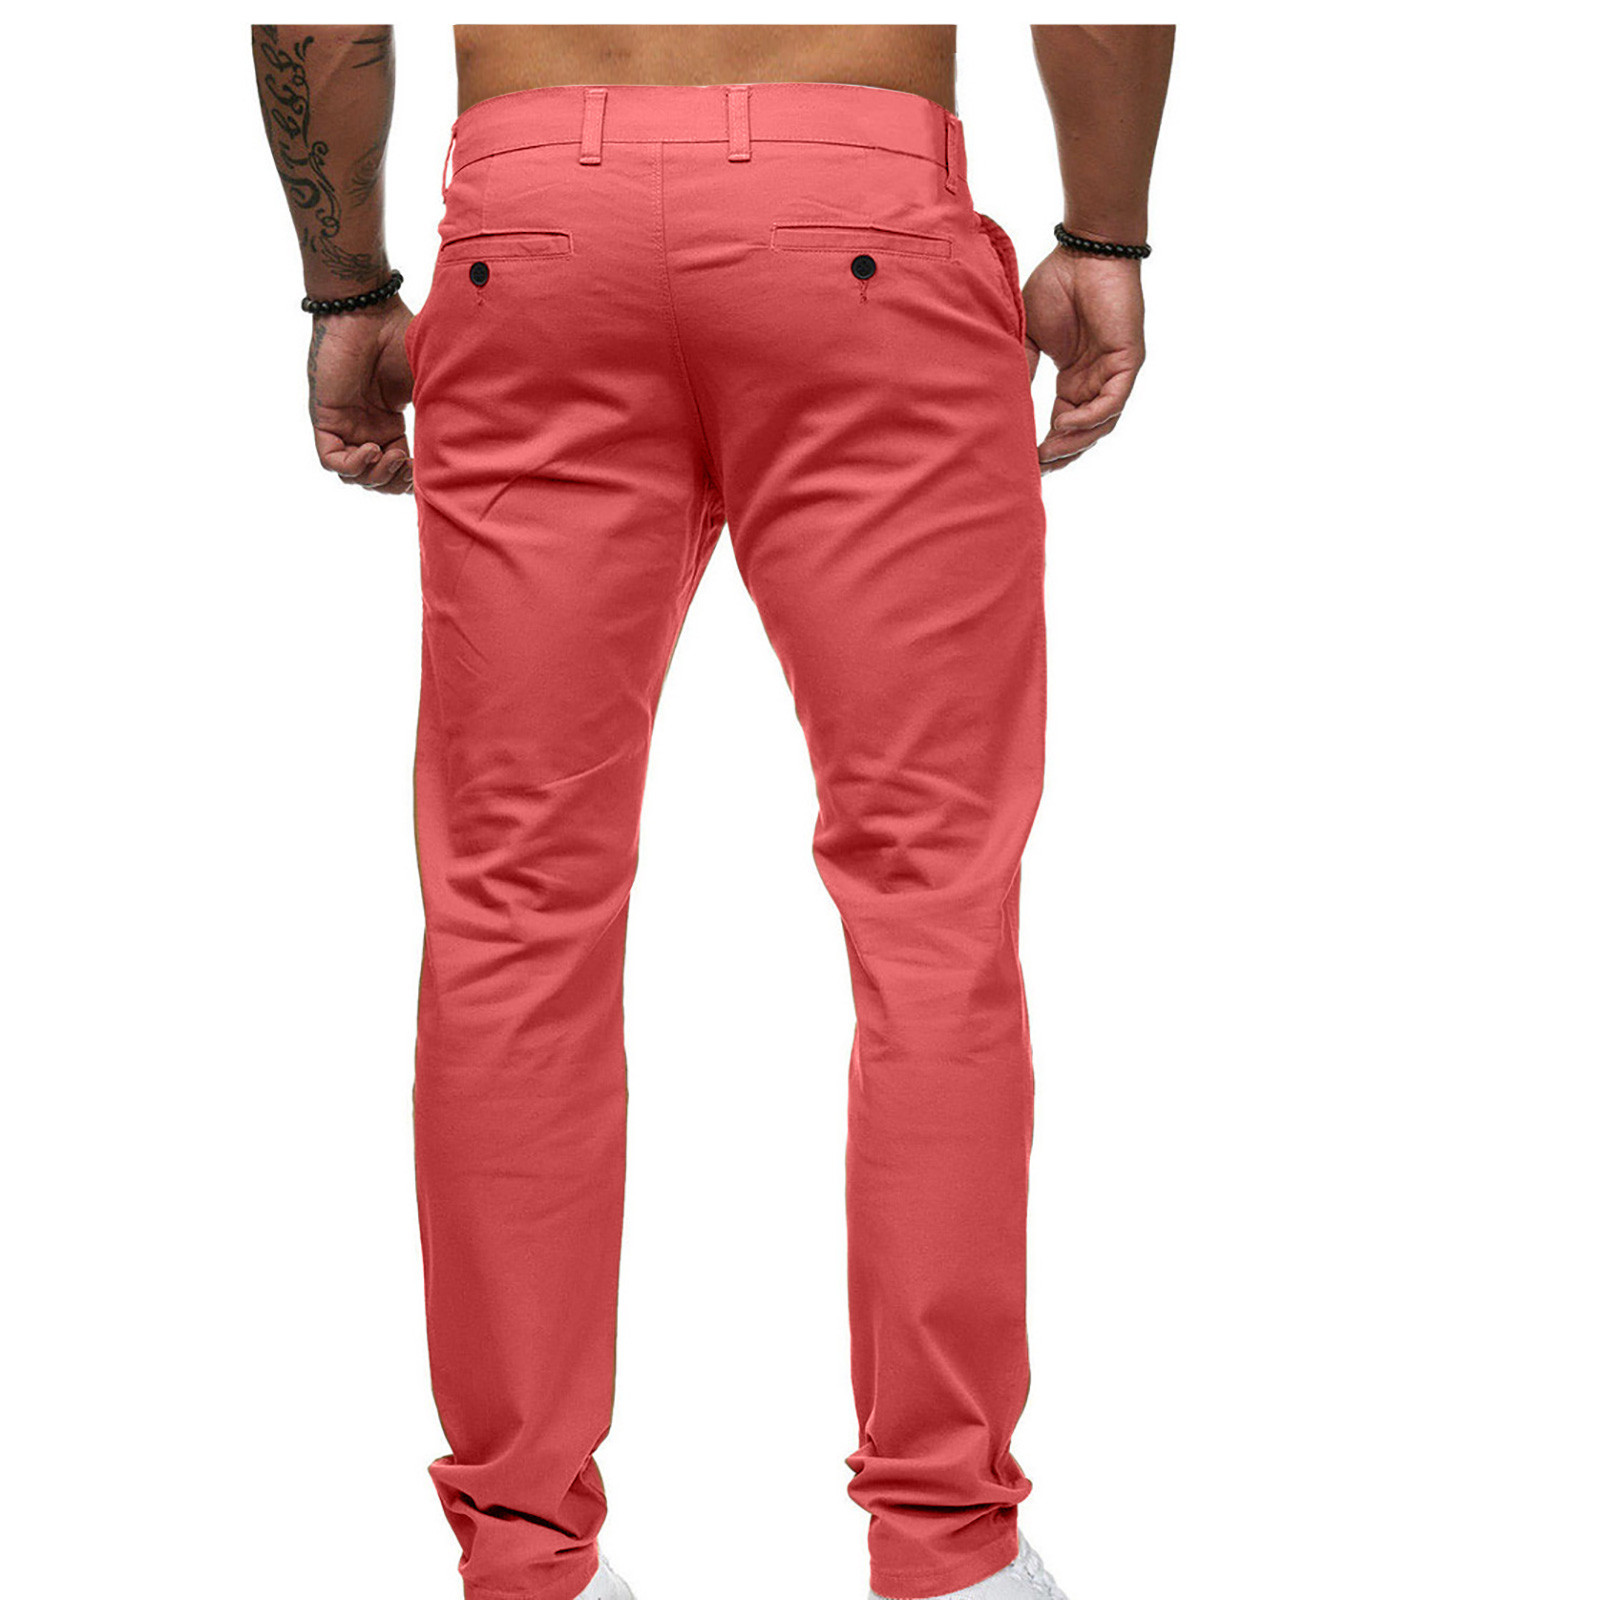 DeHolifer Mens Casual Chinos Pants Cotton Slacks Elastic Waistband Classic Fit Flat Front Khaki Pant Pink L - image 5 of 5